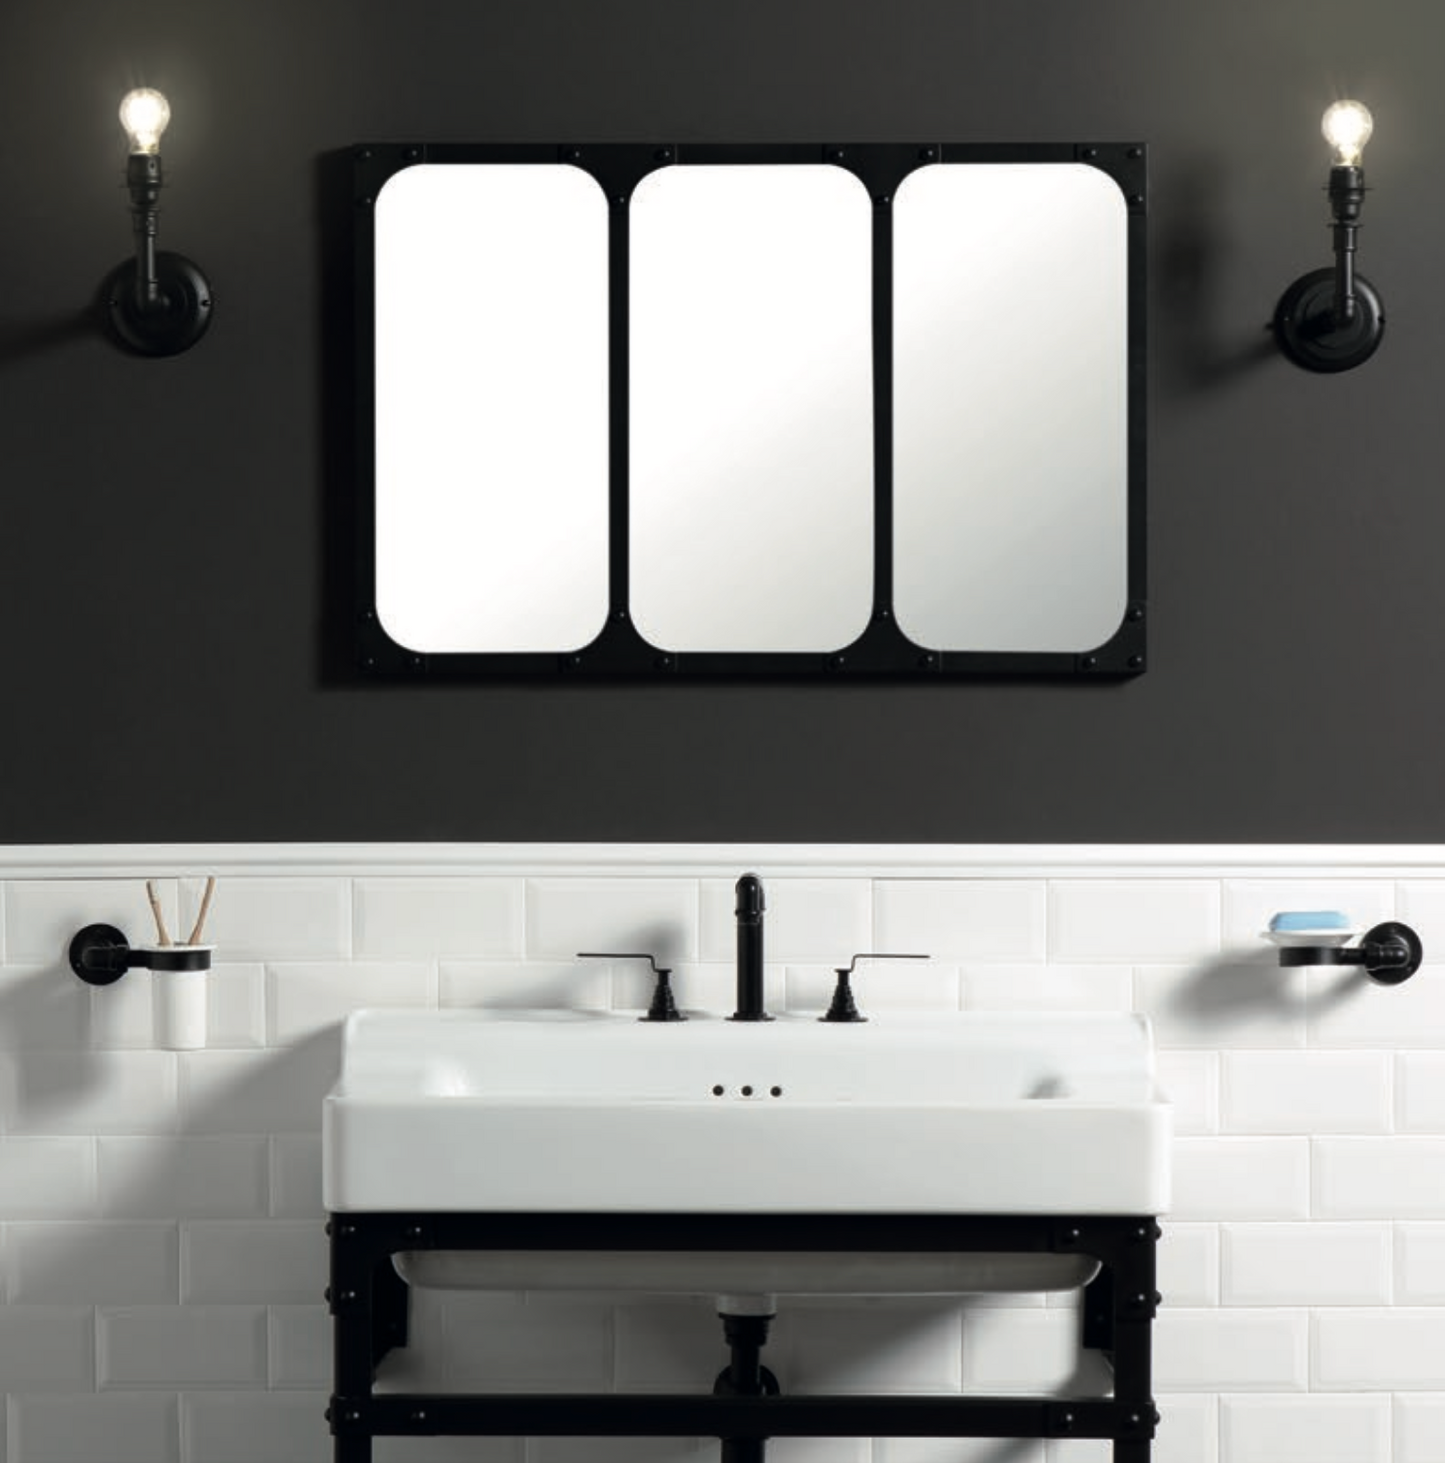 Industrialis bathroom wall light in Industrial style